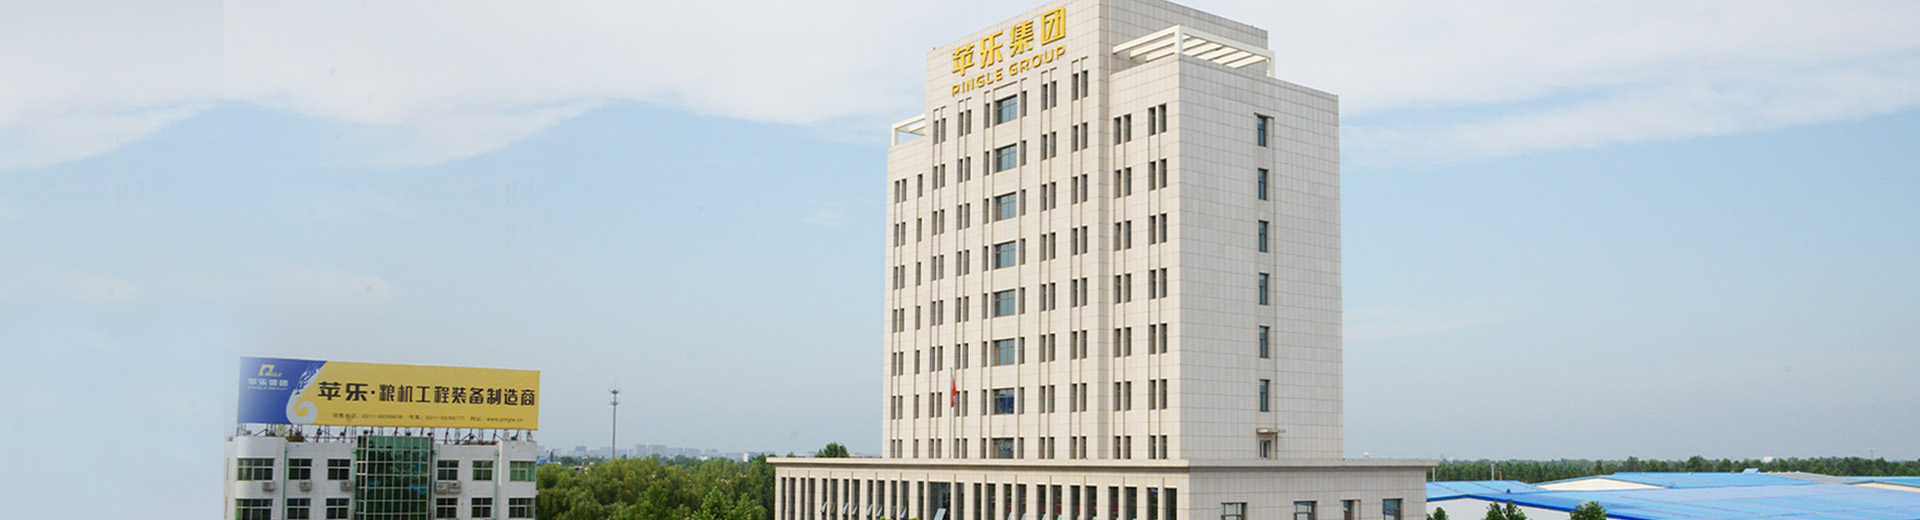 Hebei Pingle Flour Machinery Group Co., Ltd.